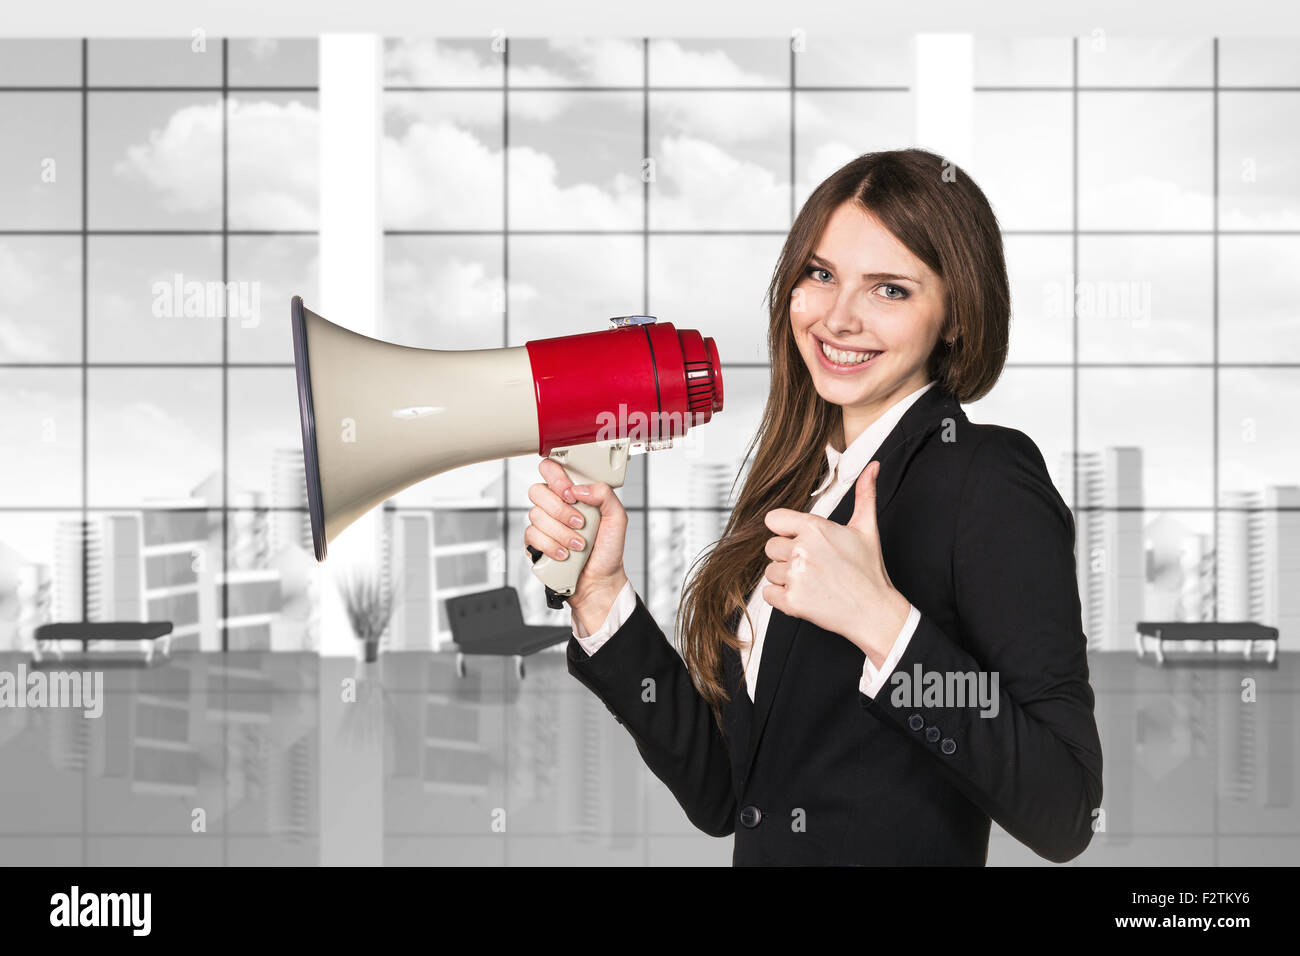 Businesswoman with megaphone et Thumbs up Banque D'Images